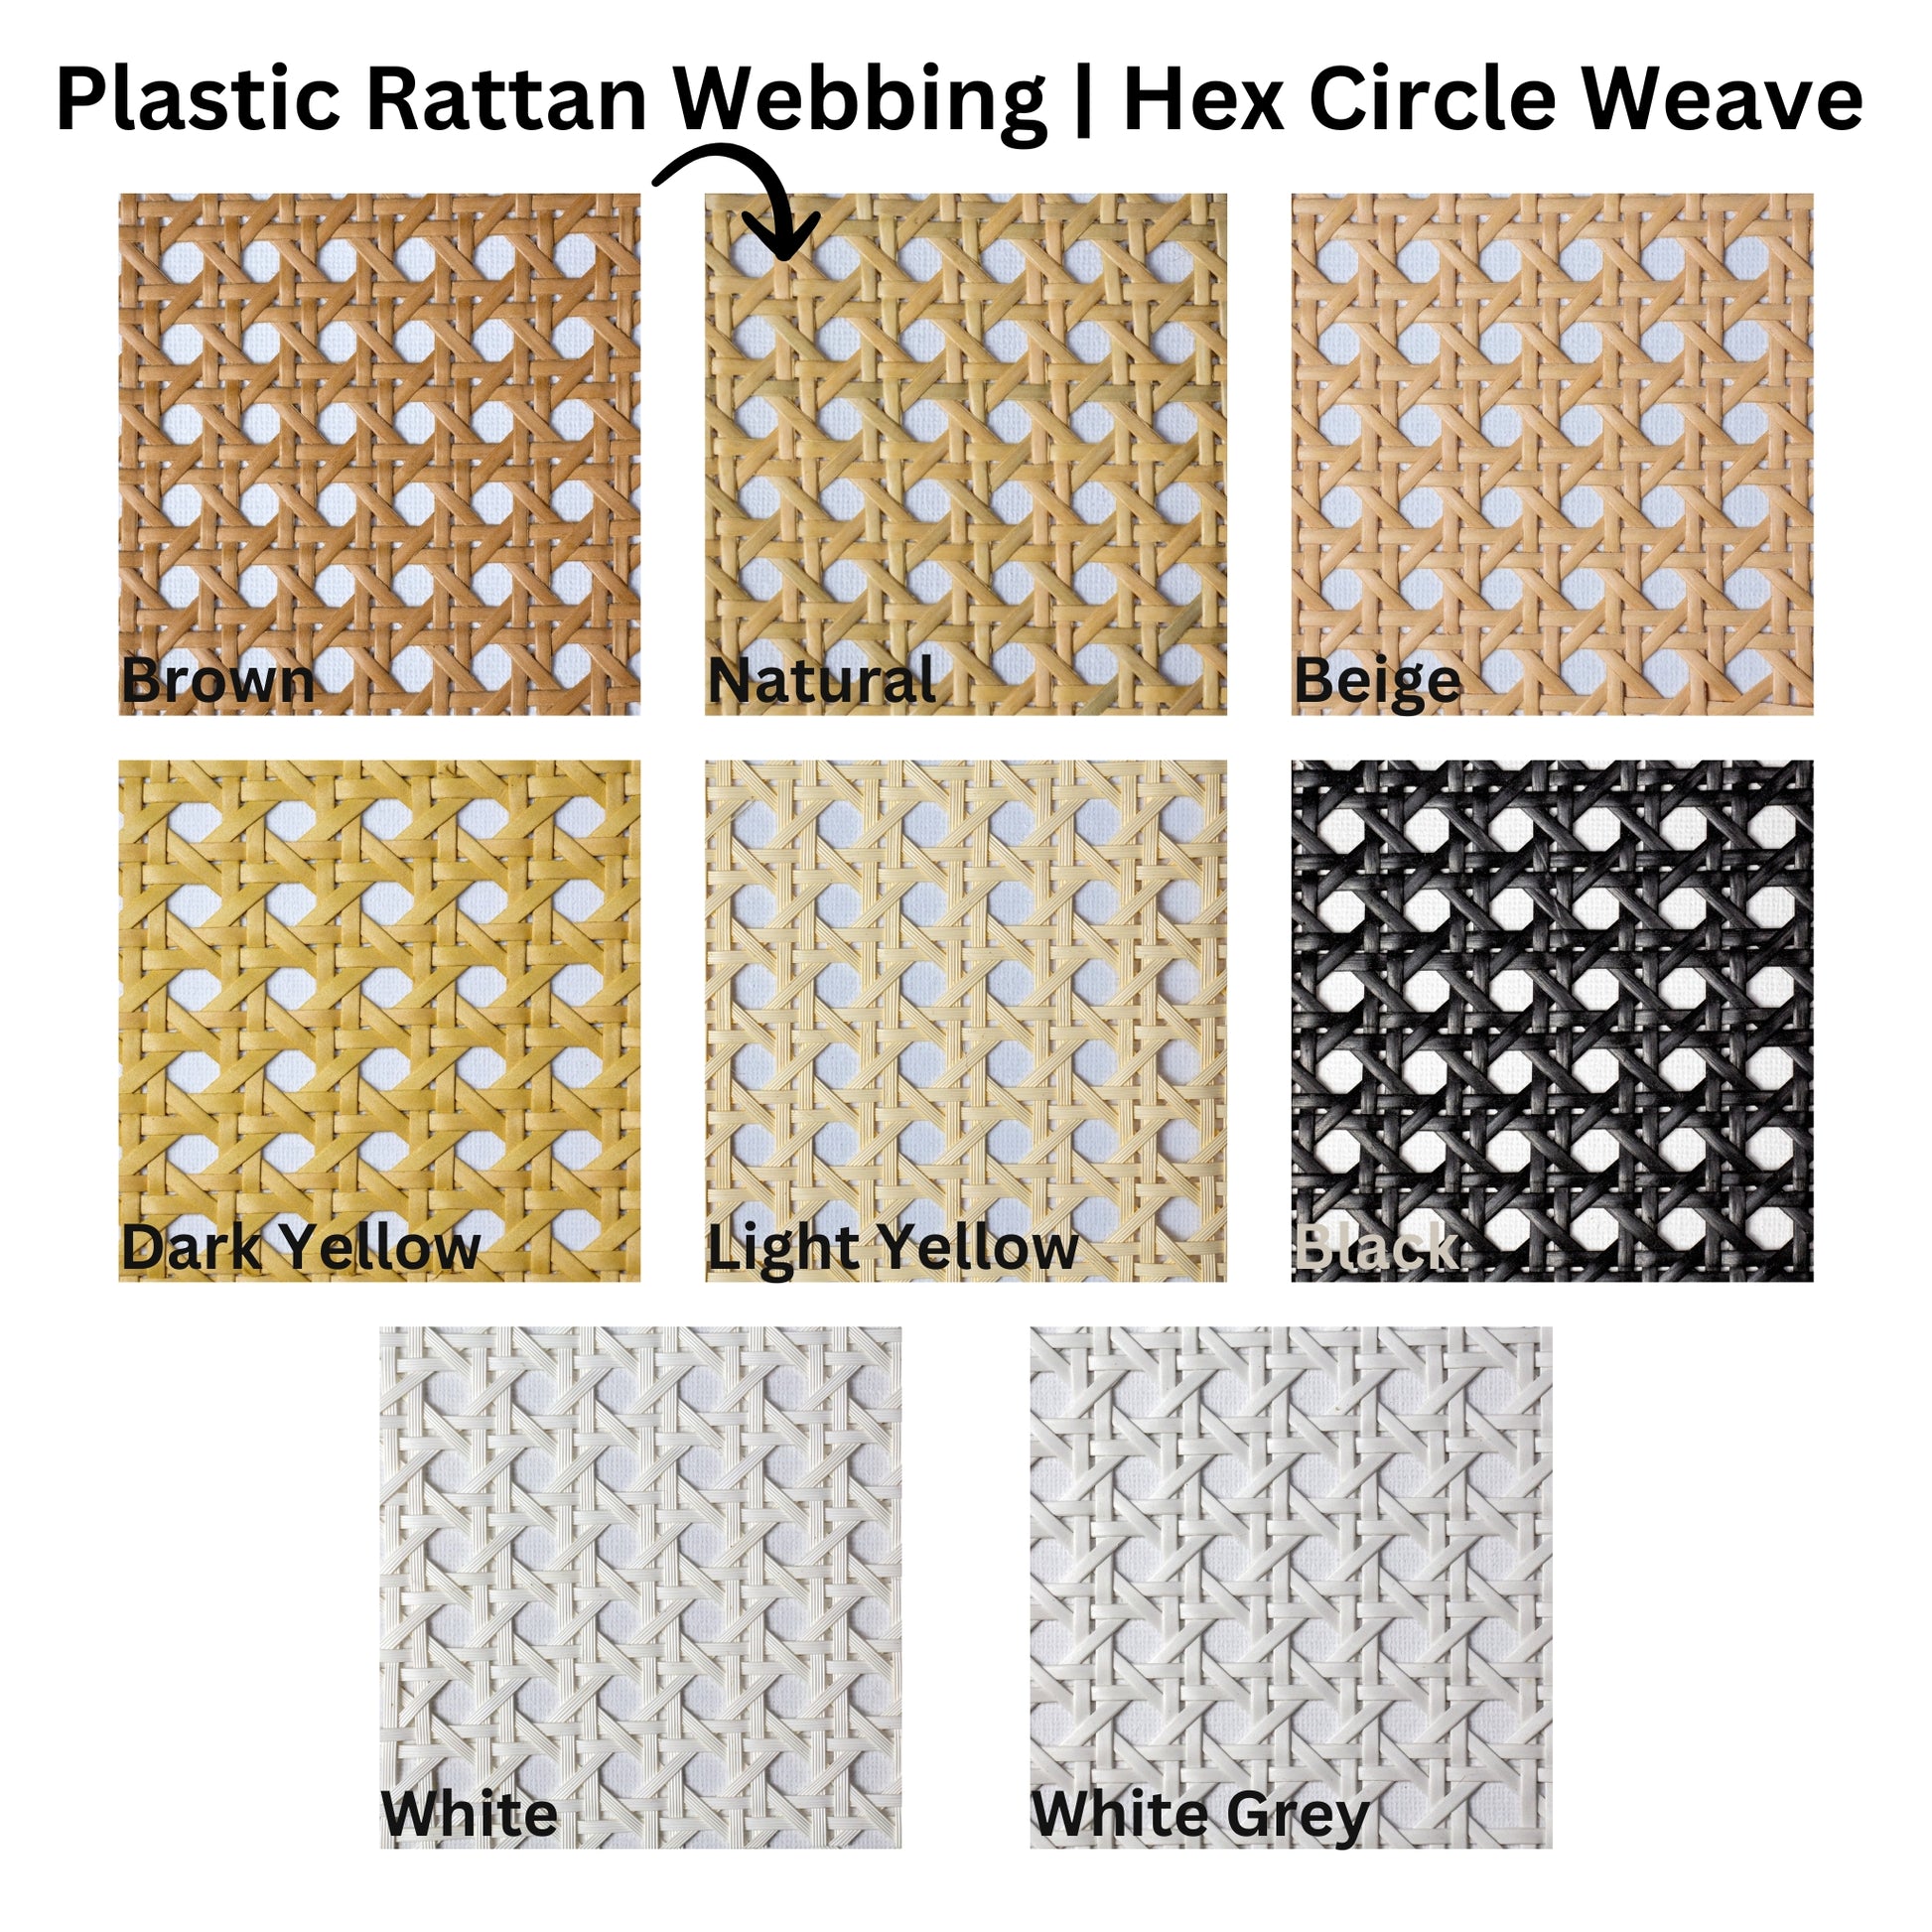 Plastic-Synthetic-Faux-PE-Rattan-Cane-Webbing-Mesh-Roll-Panel-Furniture-Chair-Repair-Open-Weave-Circle-Hexagonal-Melbourne-Australia-Natural-Brown-3